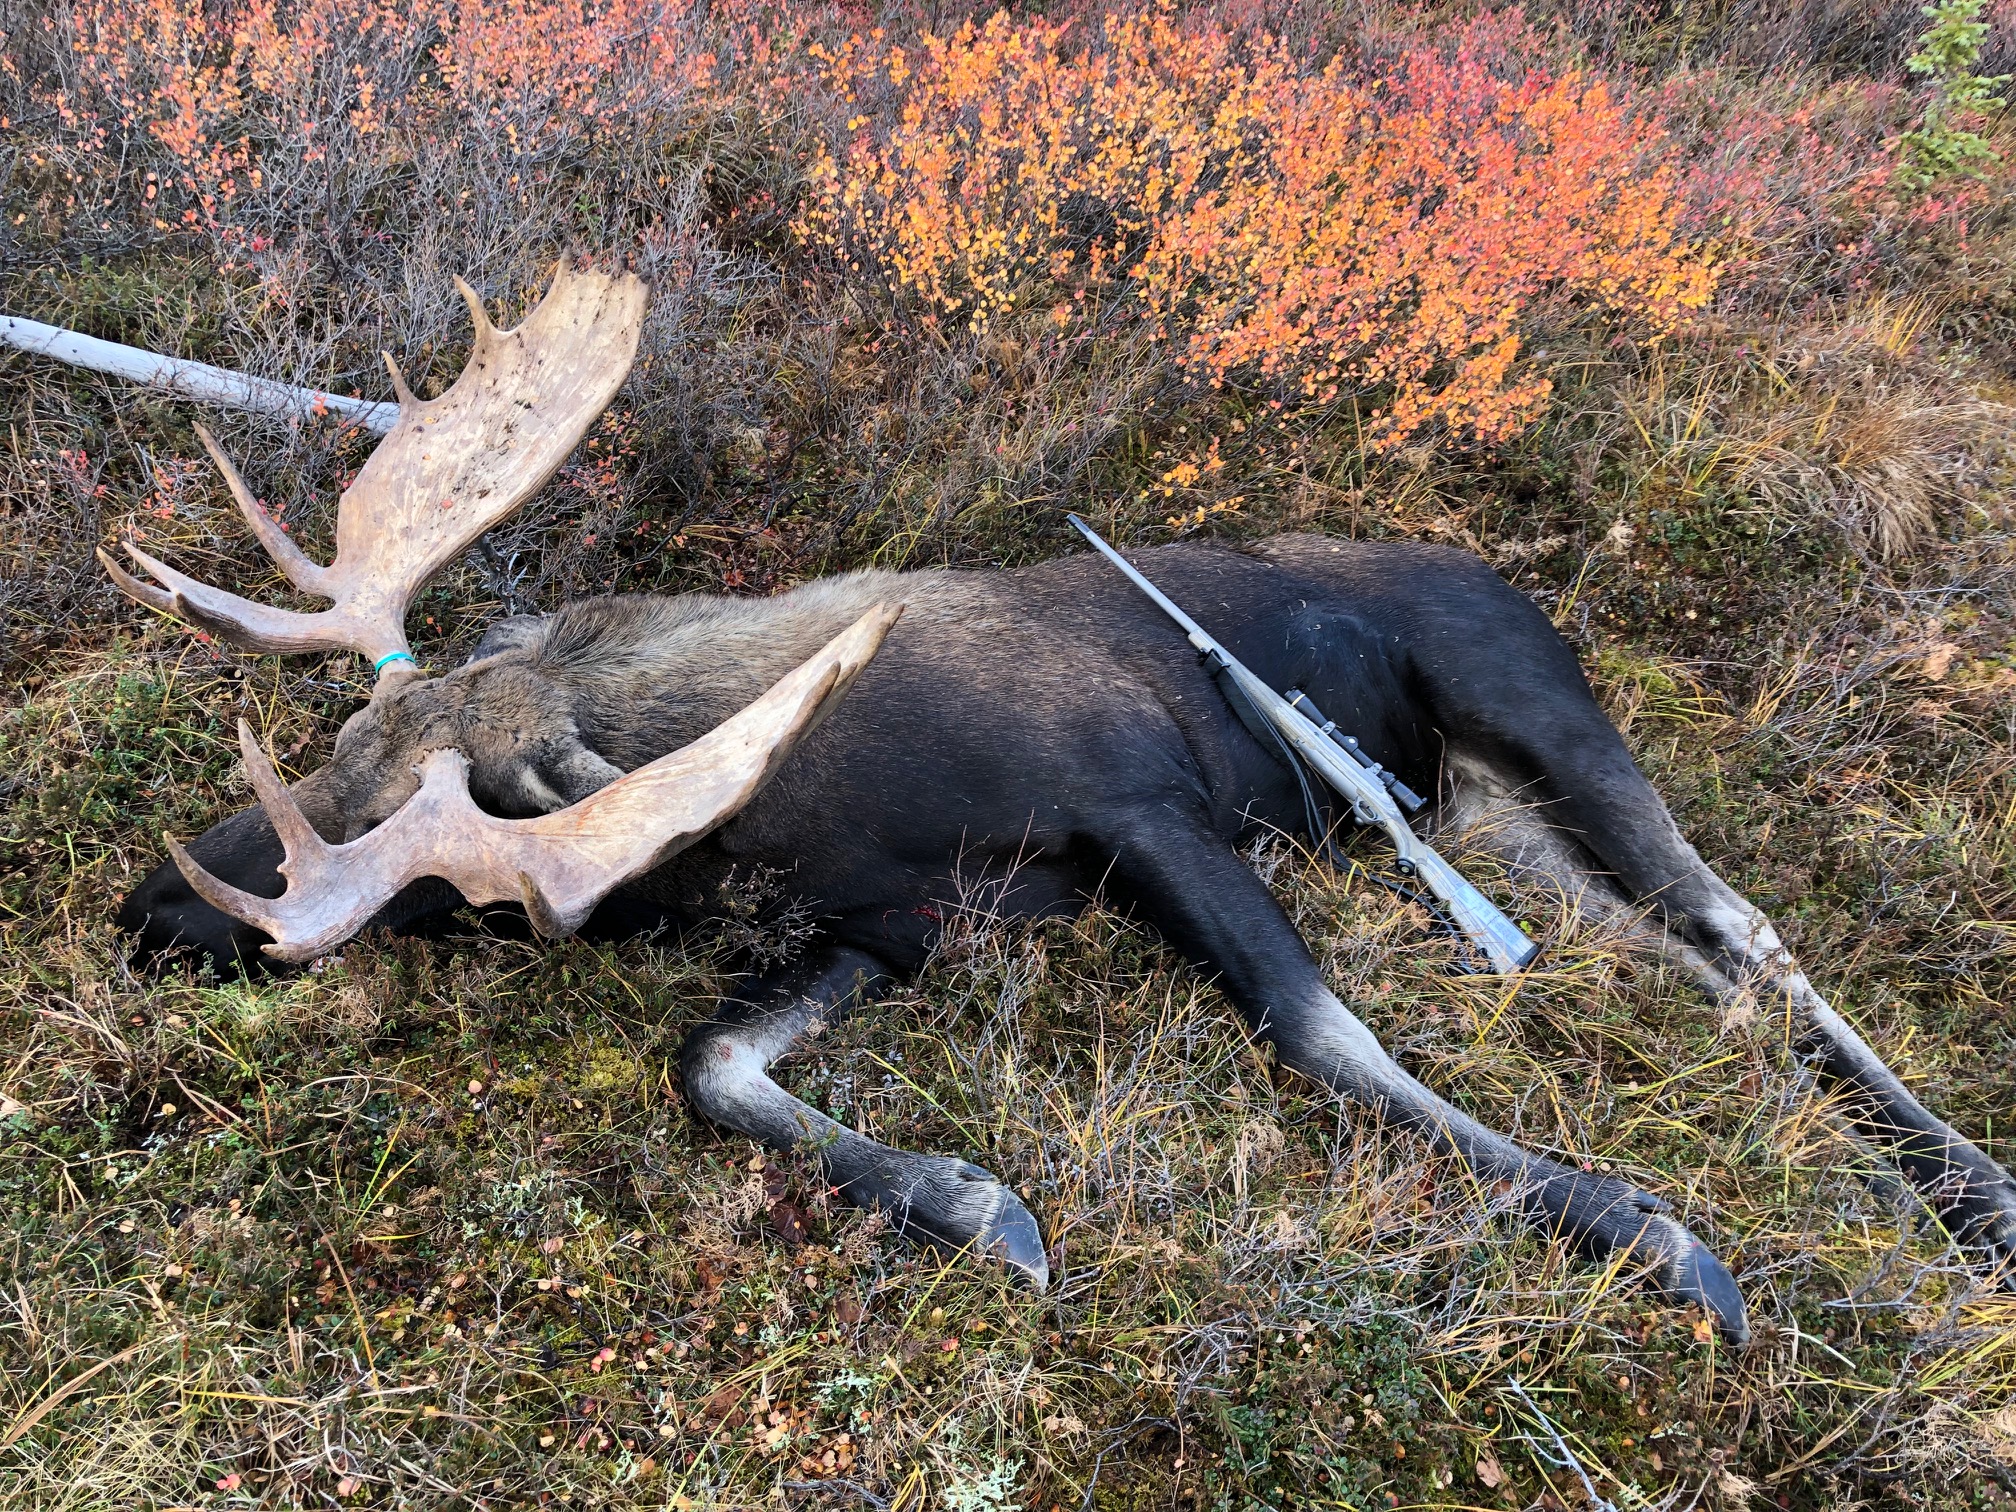 55 inch moose down Sept 20 2022 .jpg